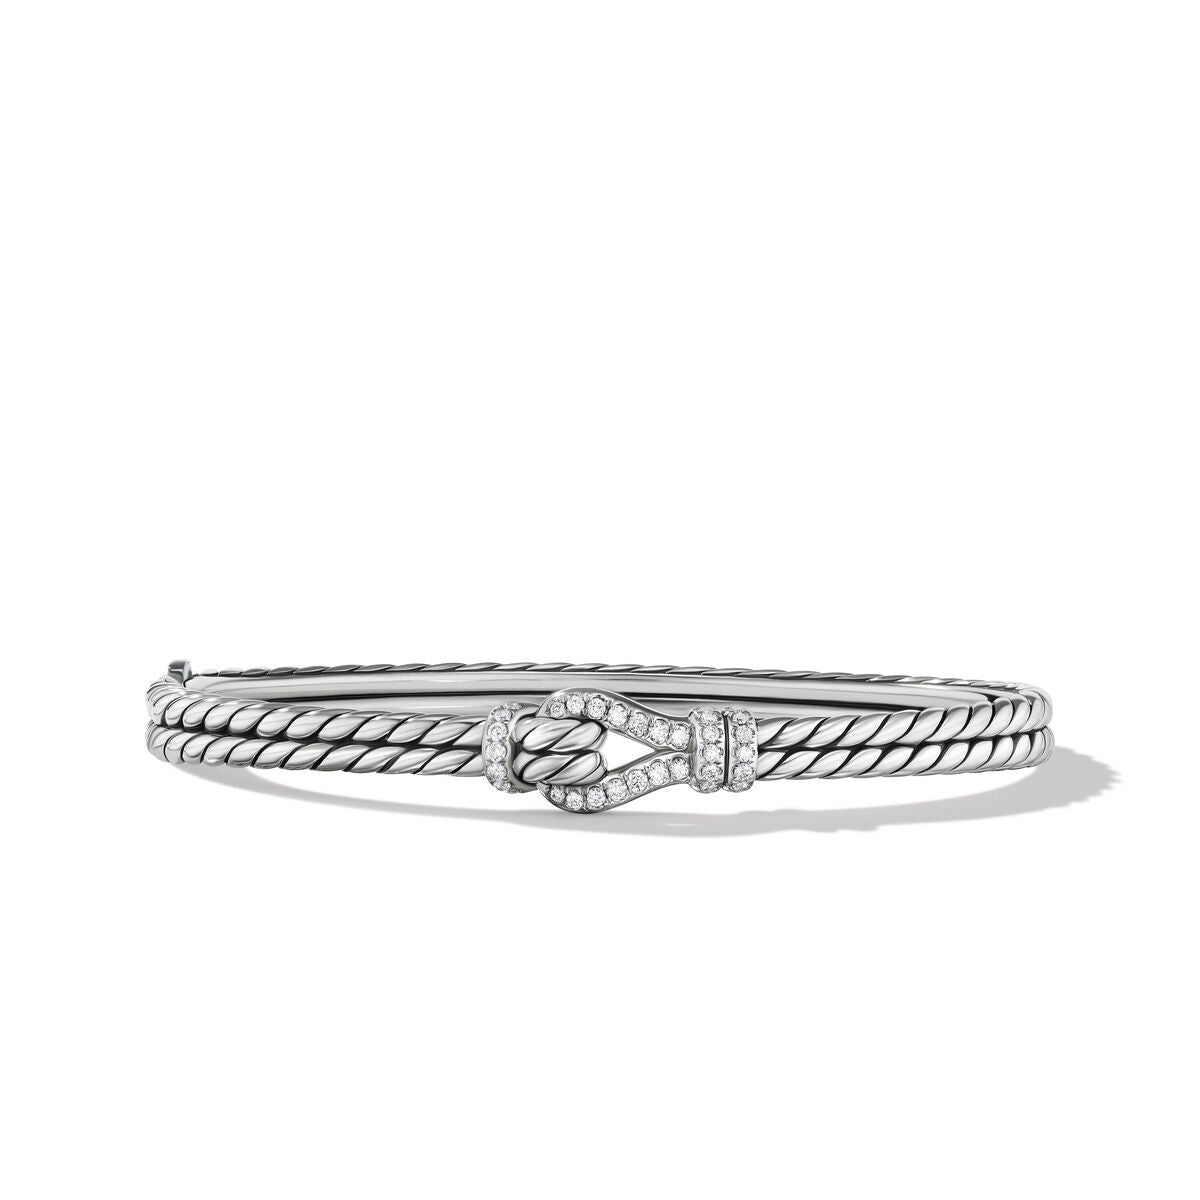 Thoroughbred Loop Bracelet with Pavé Diamonds